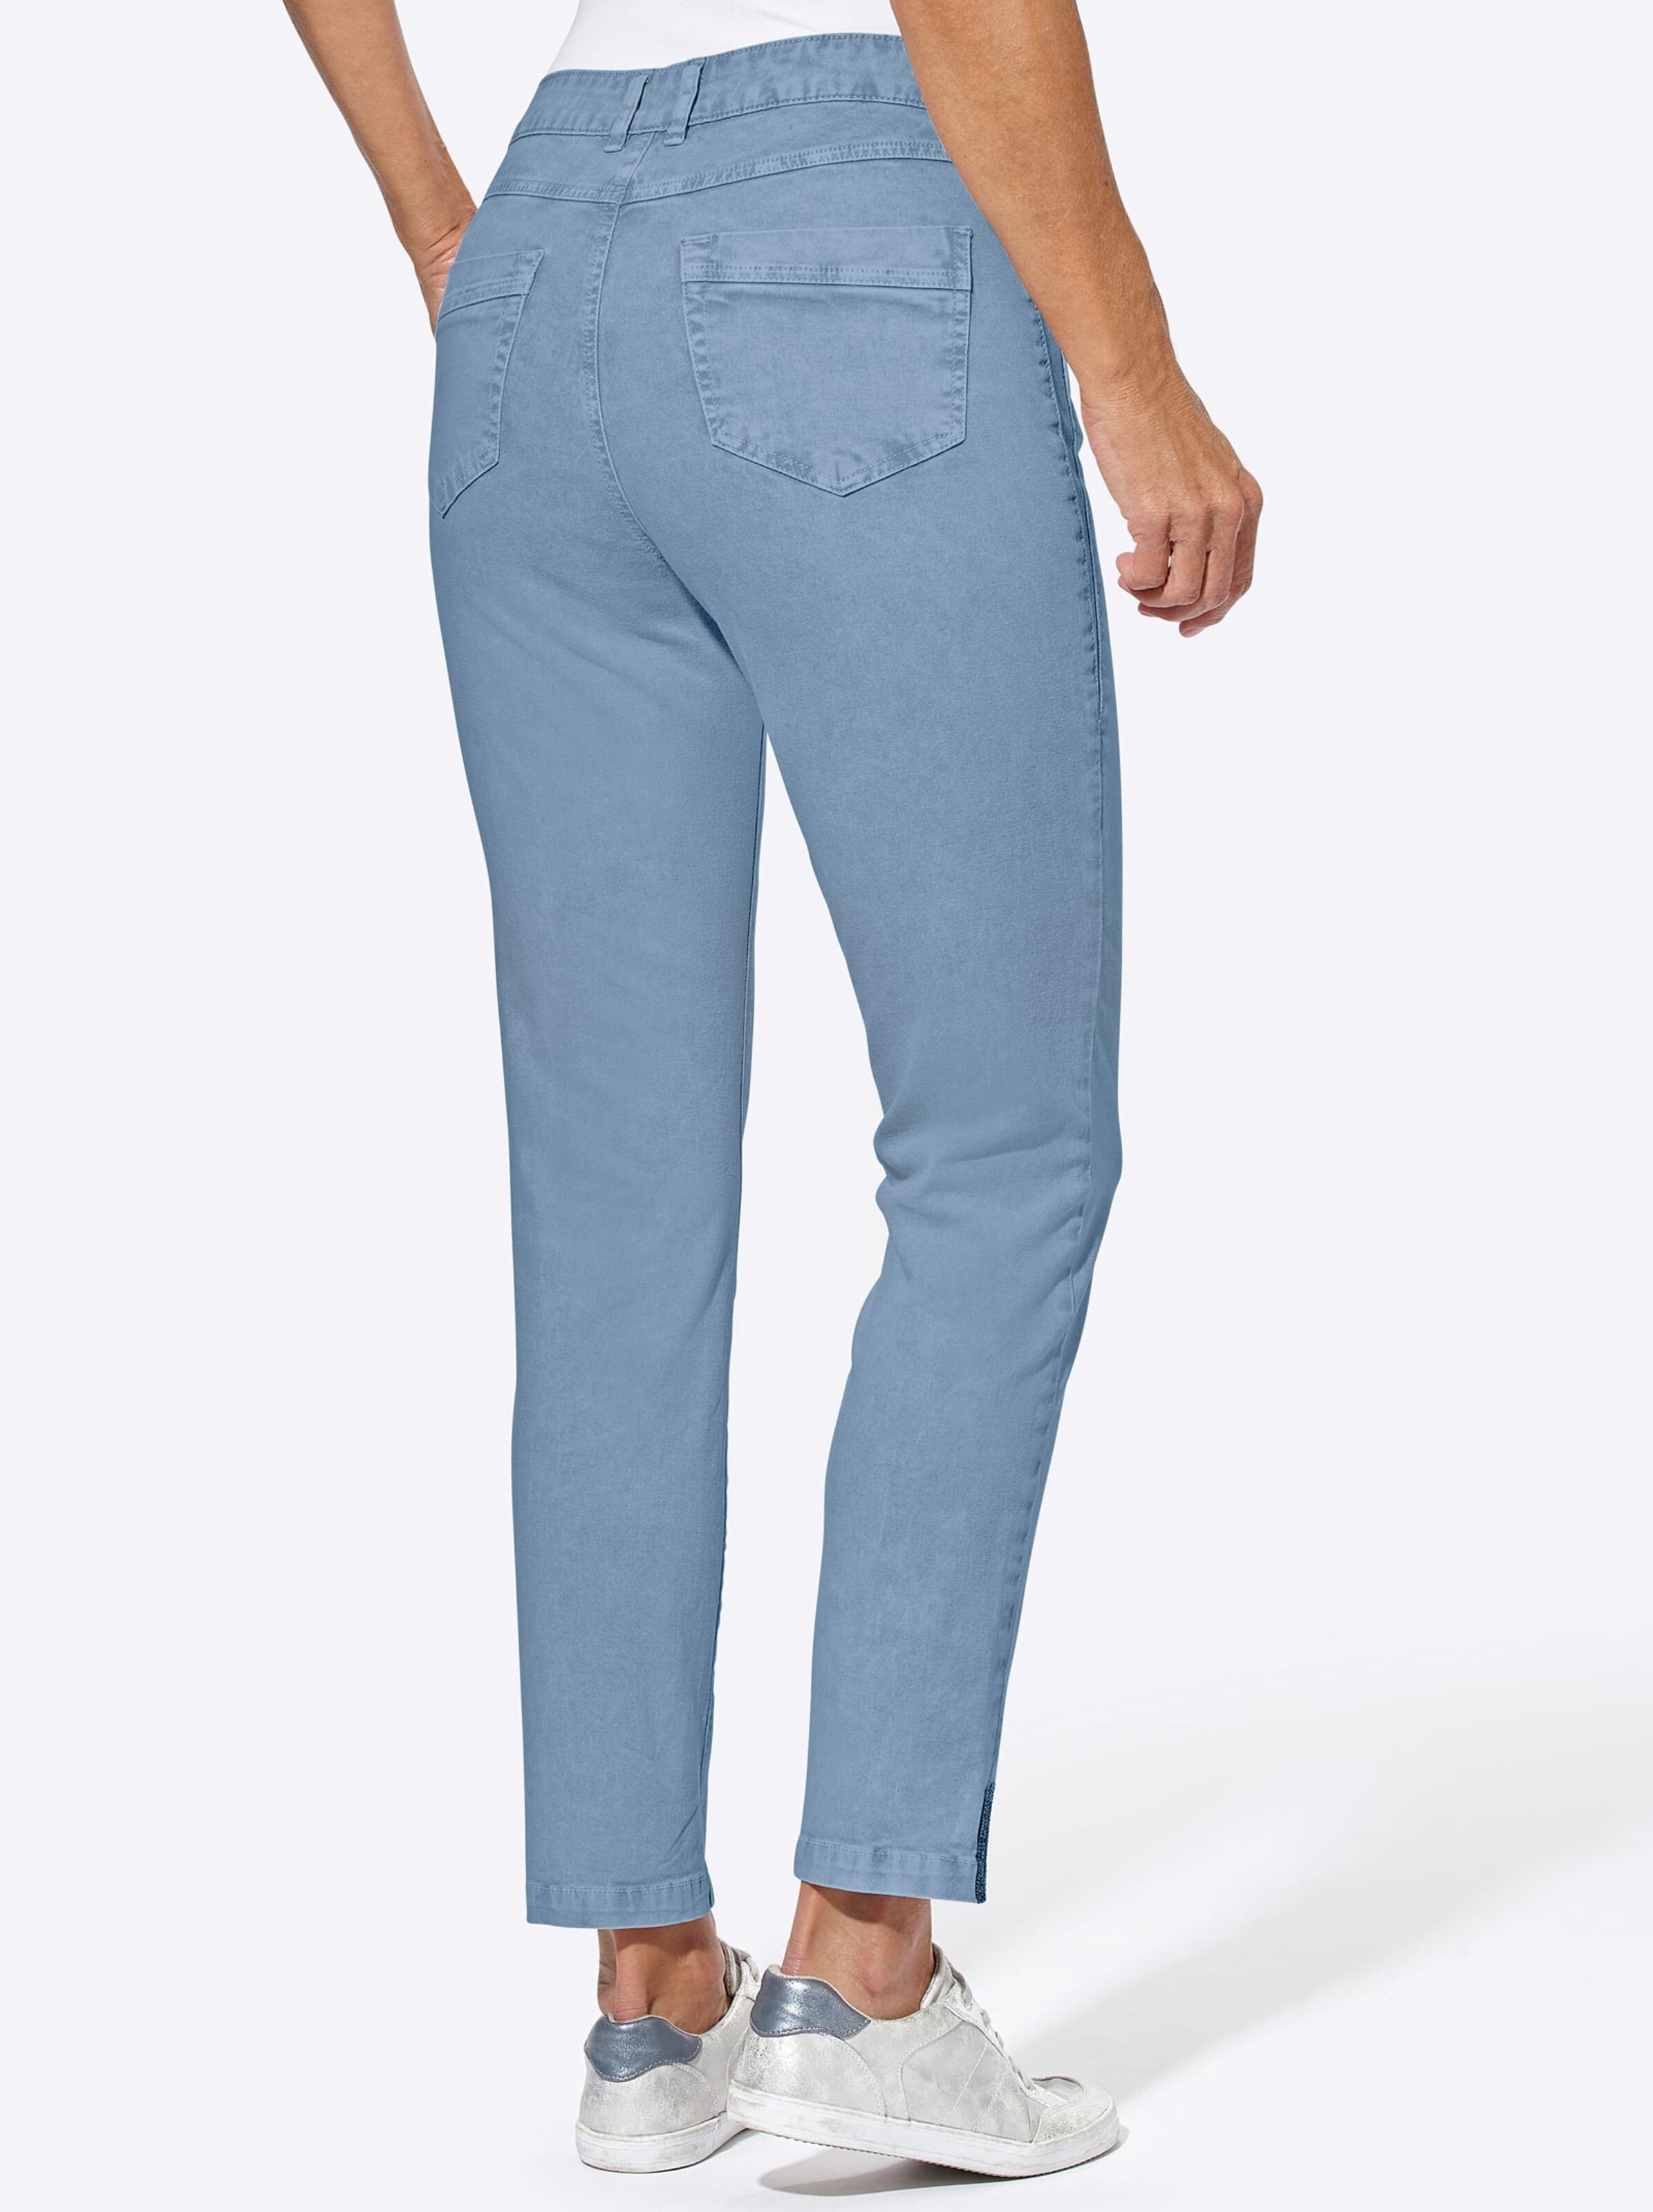 Damenmode Jeans Stretch-Jeans in blue-bleached 